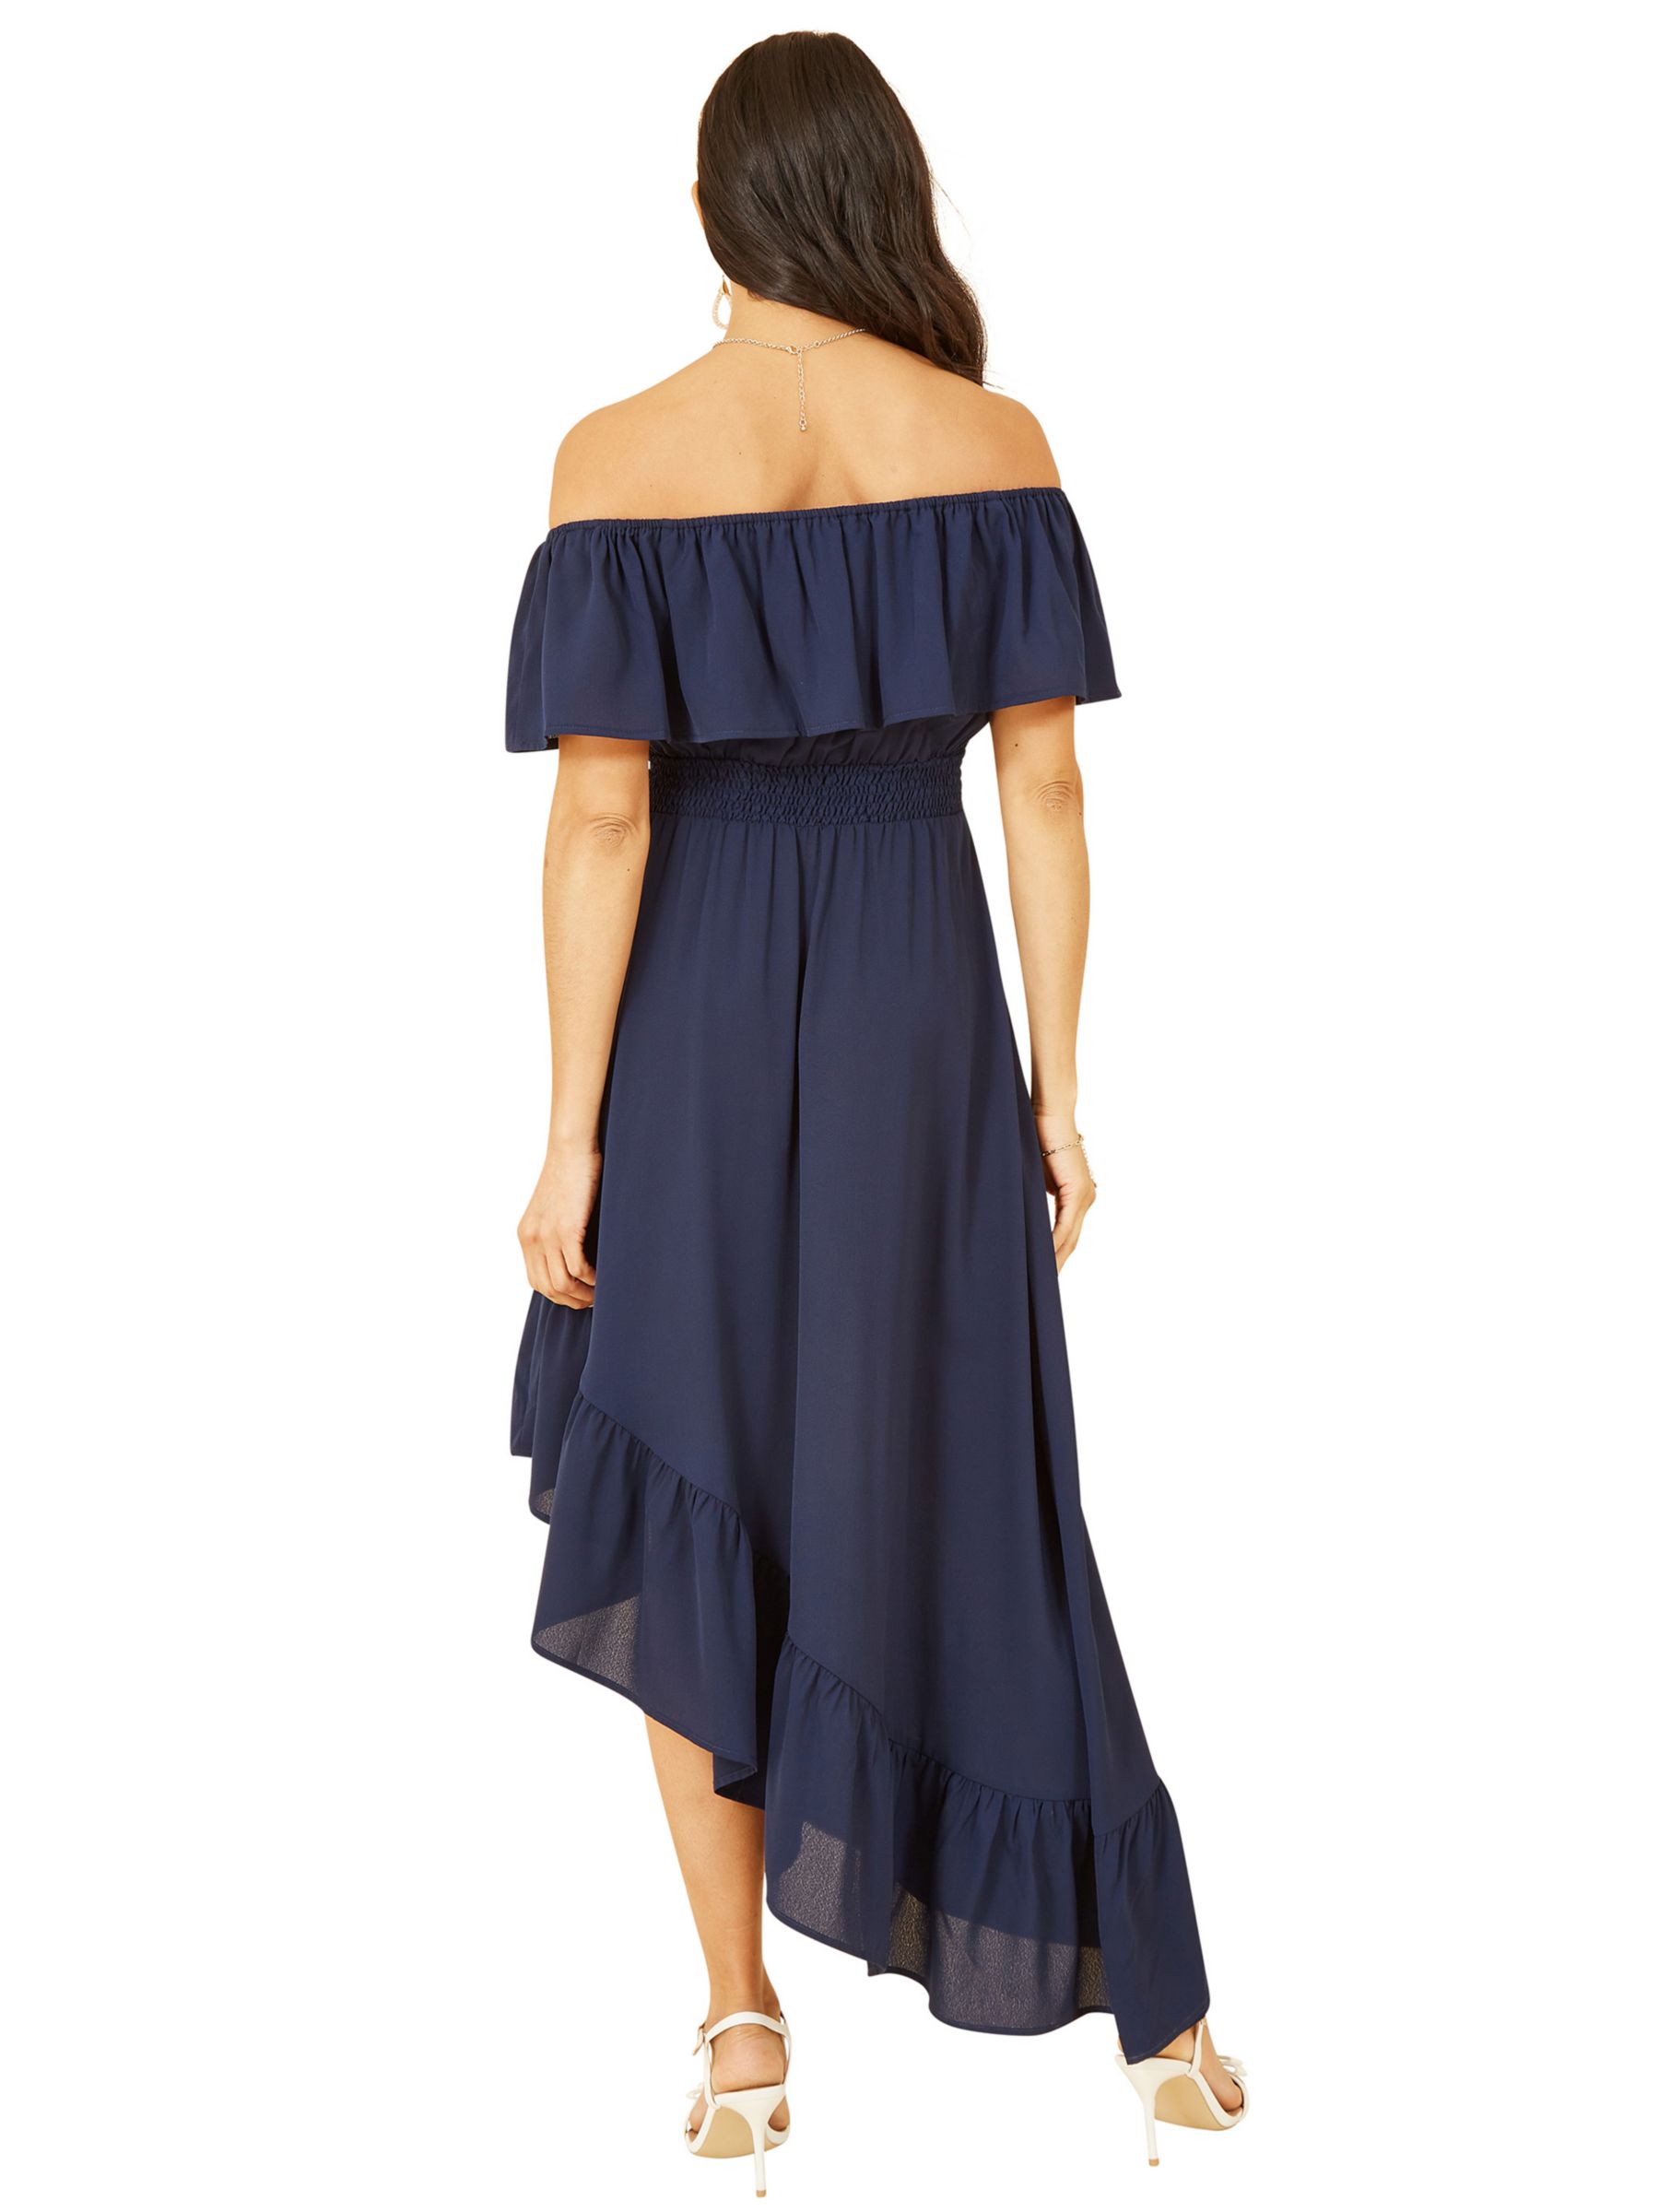 Yumi Tiered Ruffled Bardot Asymmetric Dress, Navy, 8